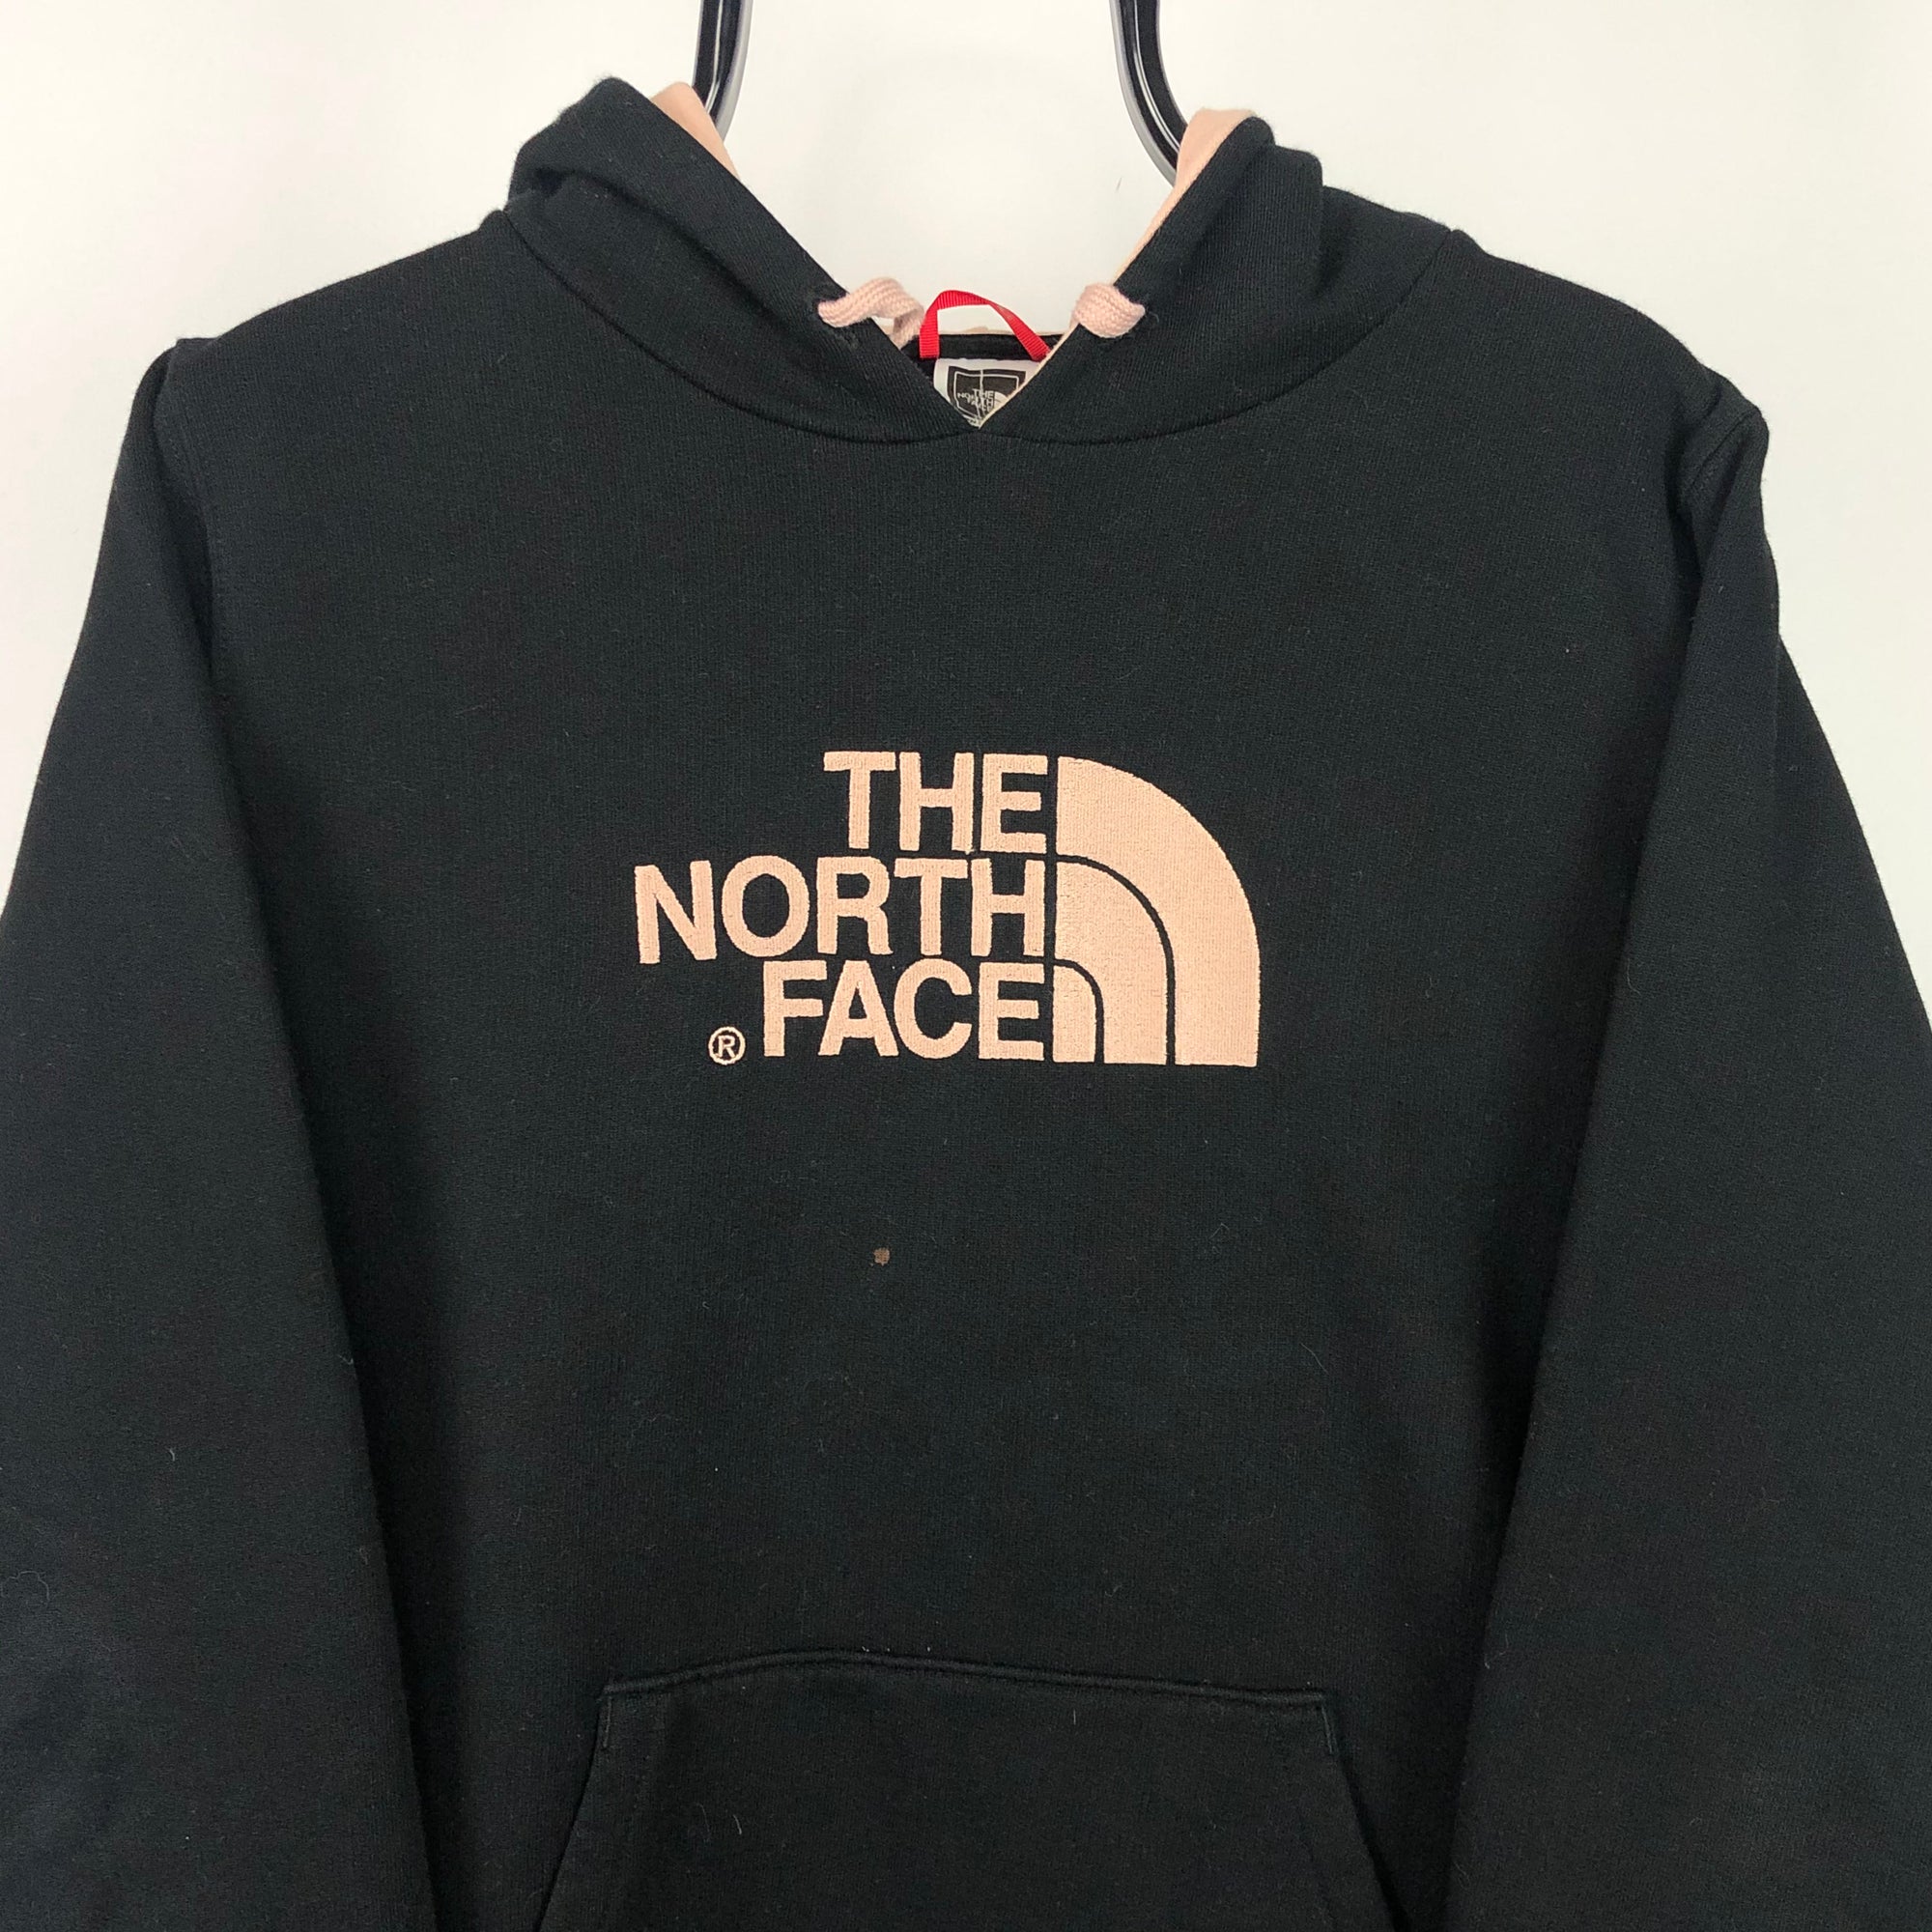 North Face Hoodie in Black/Rose - Men's Small/Women's Medium